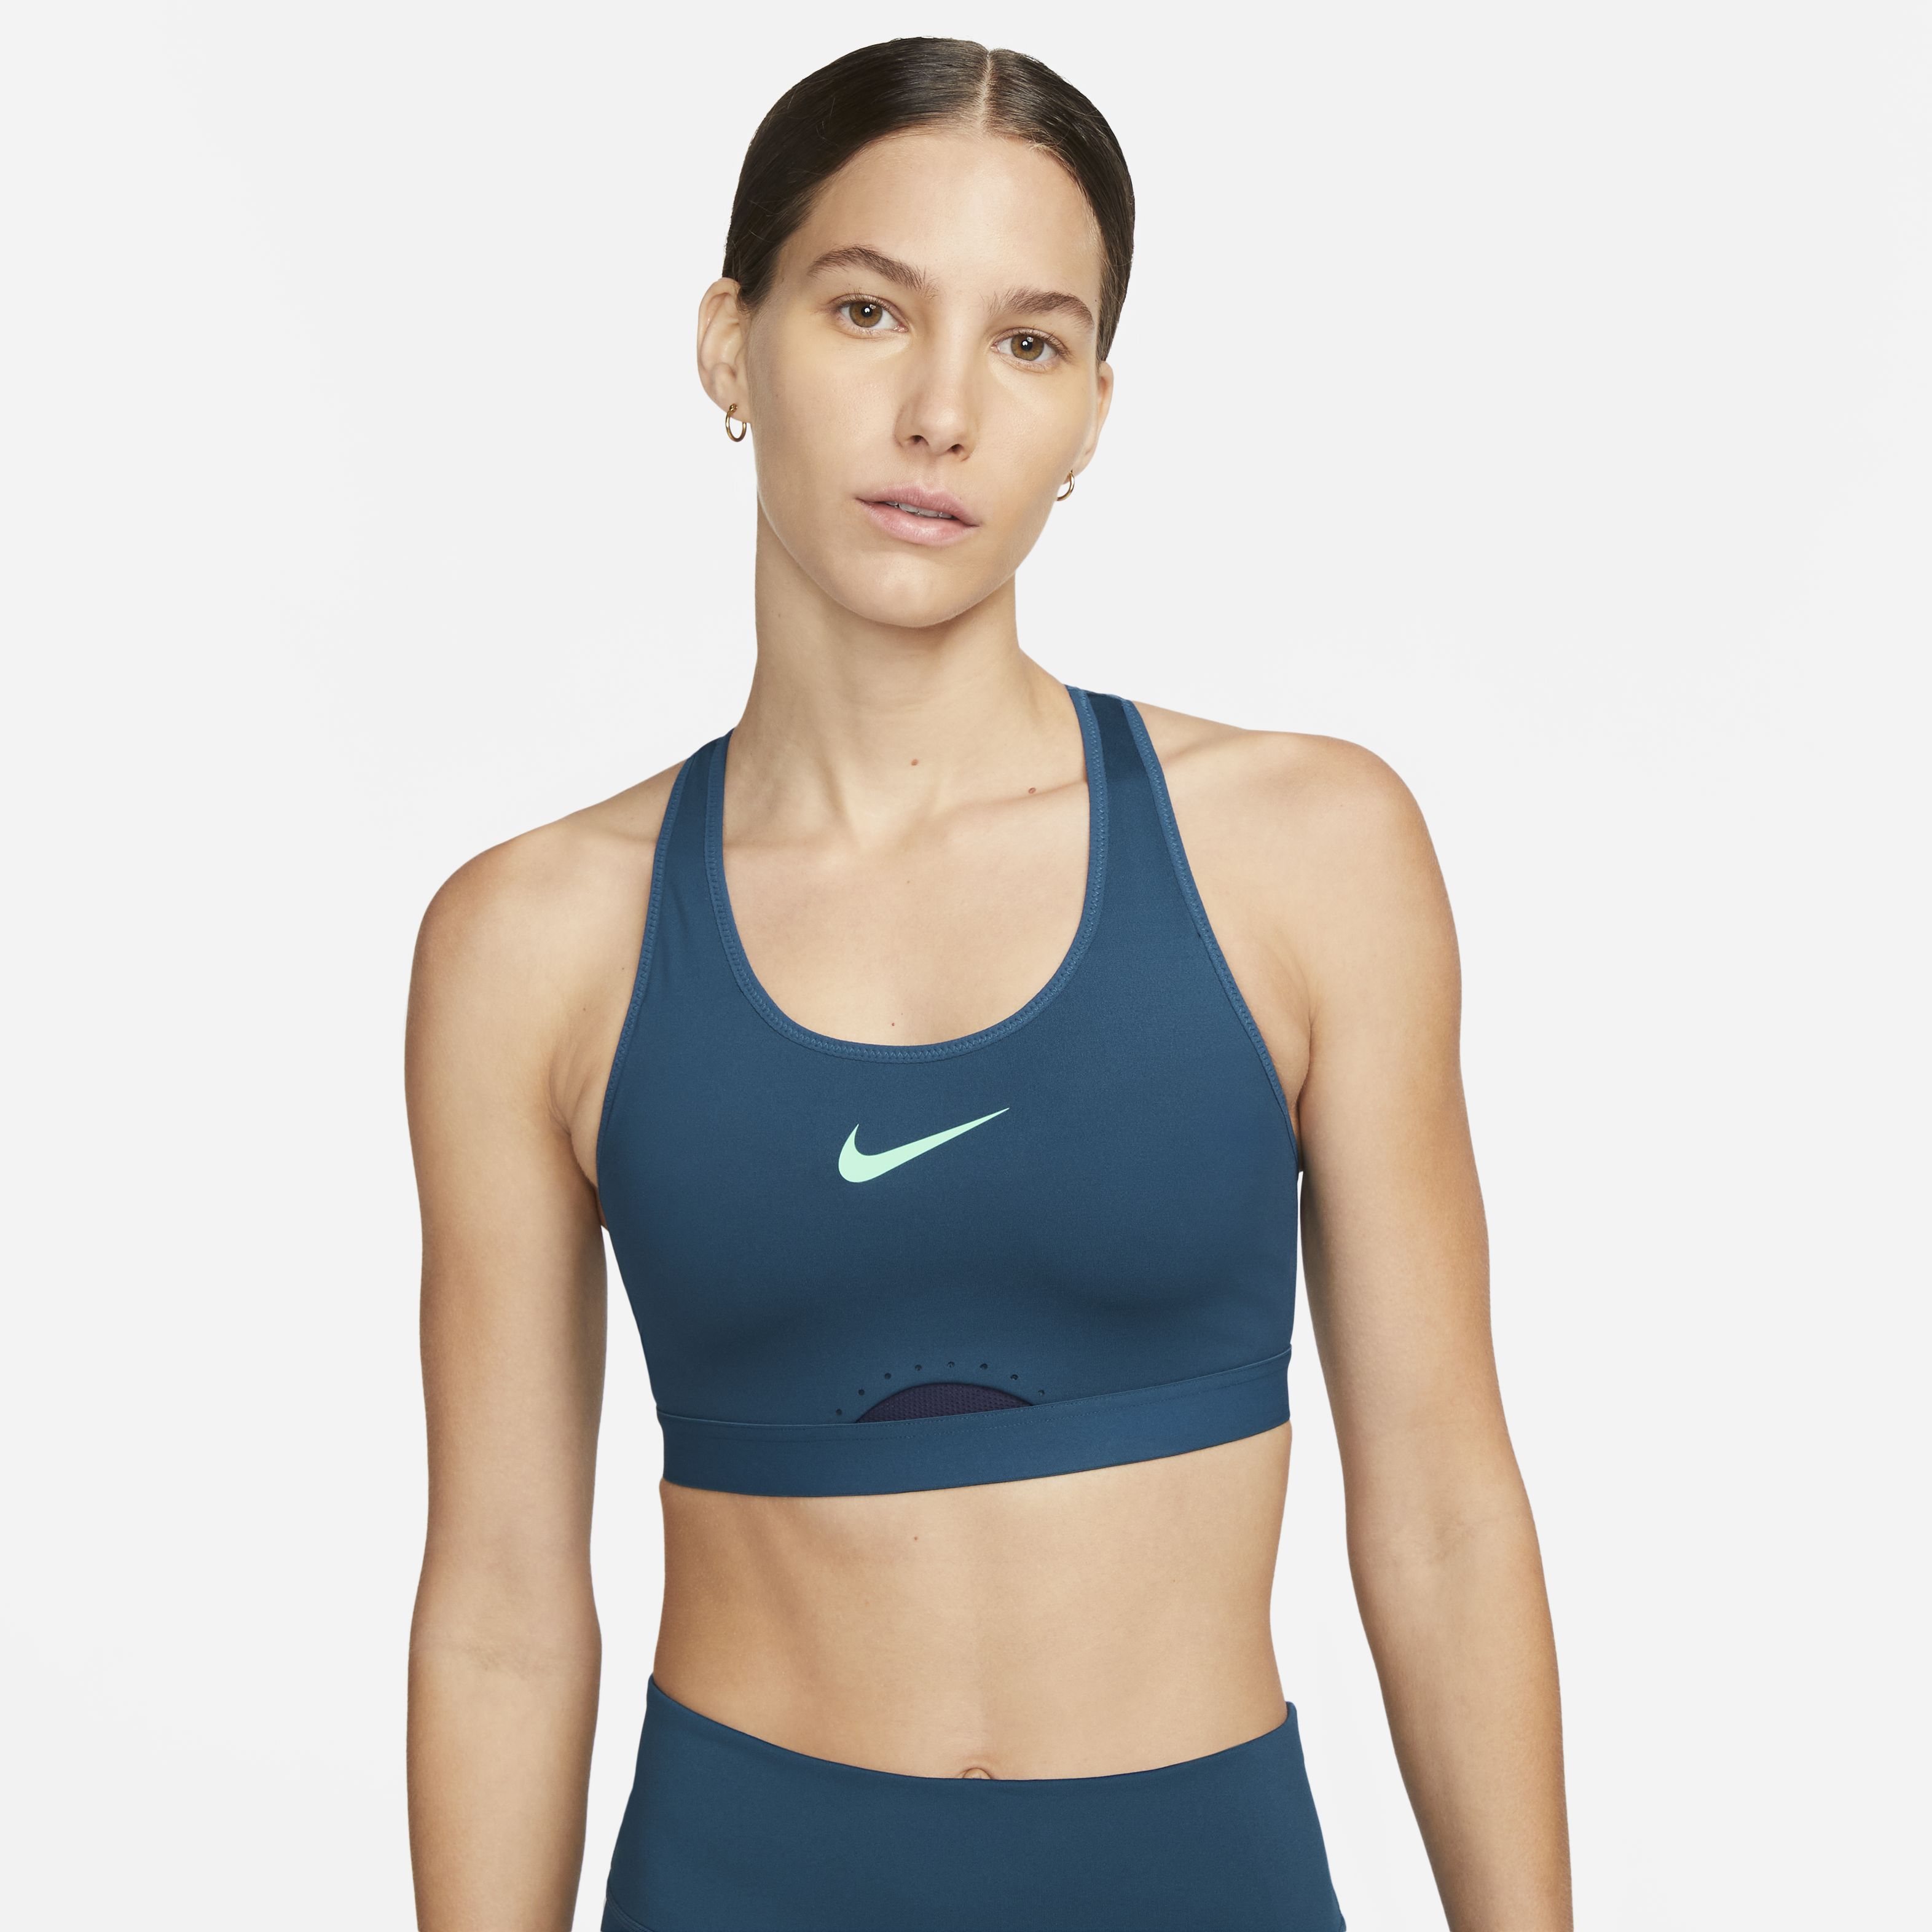 Soporte-alto - Tops deportivos para mujer - Nike Argentina